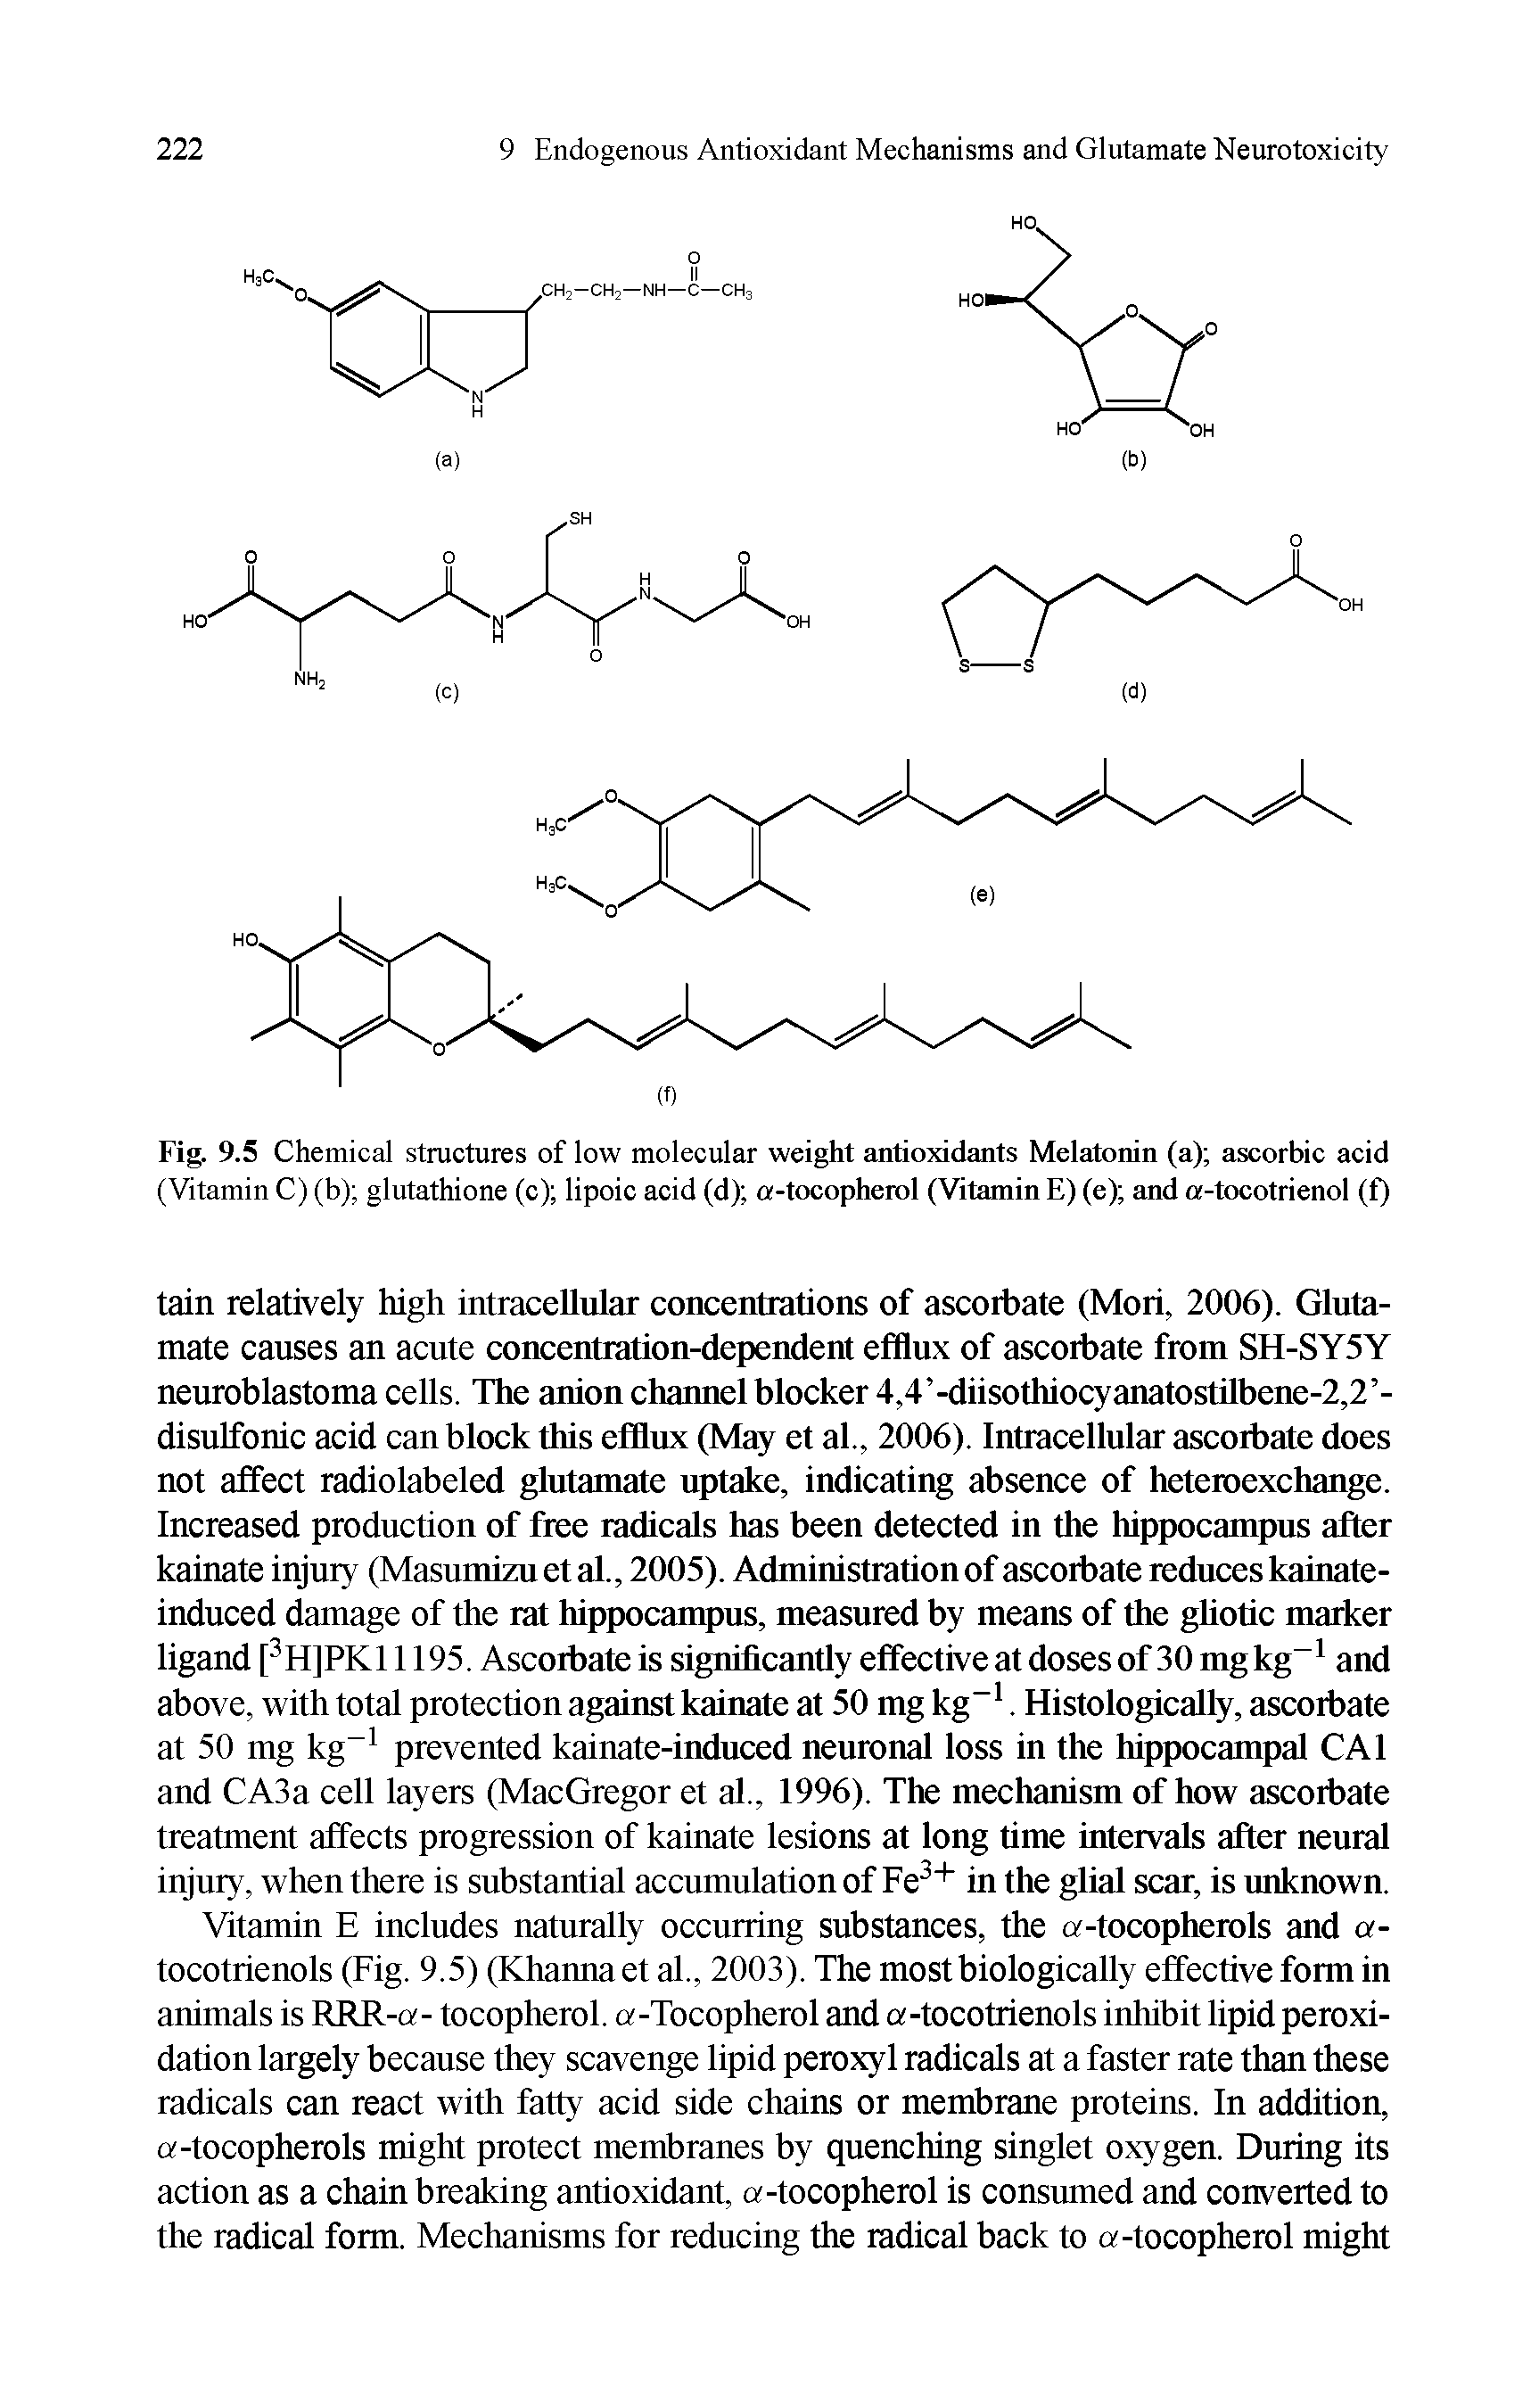 Fig. 9.5 Chemical structures of low molecular weight antioxidants Melatonin (a) ascorbic acid (Vitamin C) (b) glutathione (c) lipoic acid (d) a-tocopherol (Vitamin E) (e) and a-tocotrienol (f)...